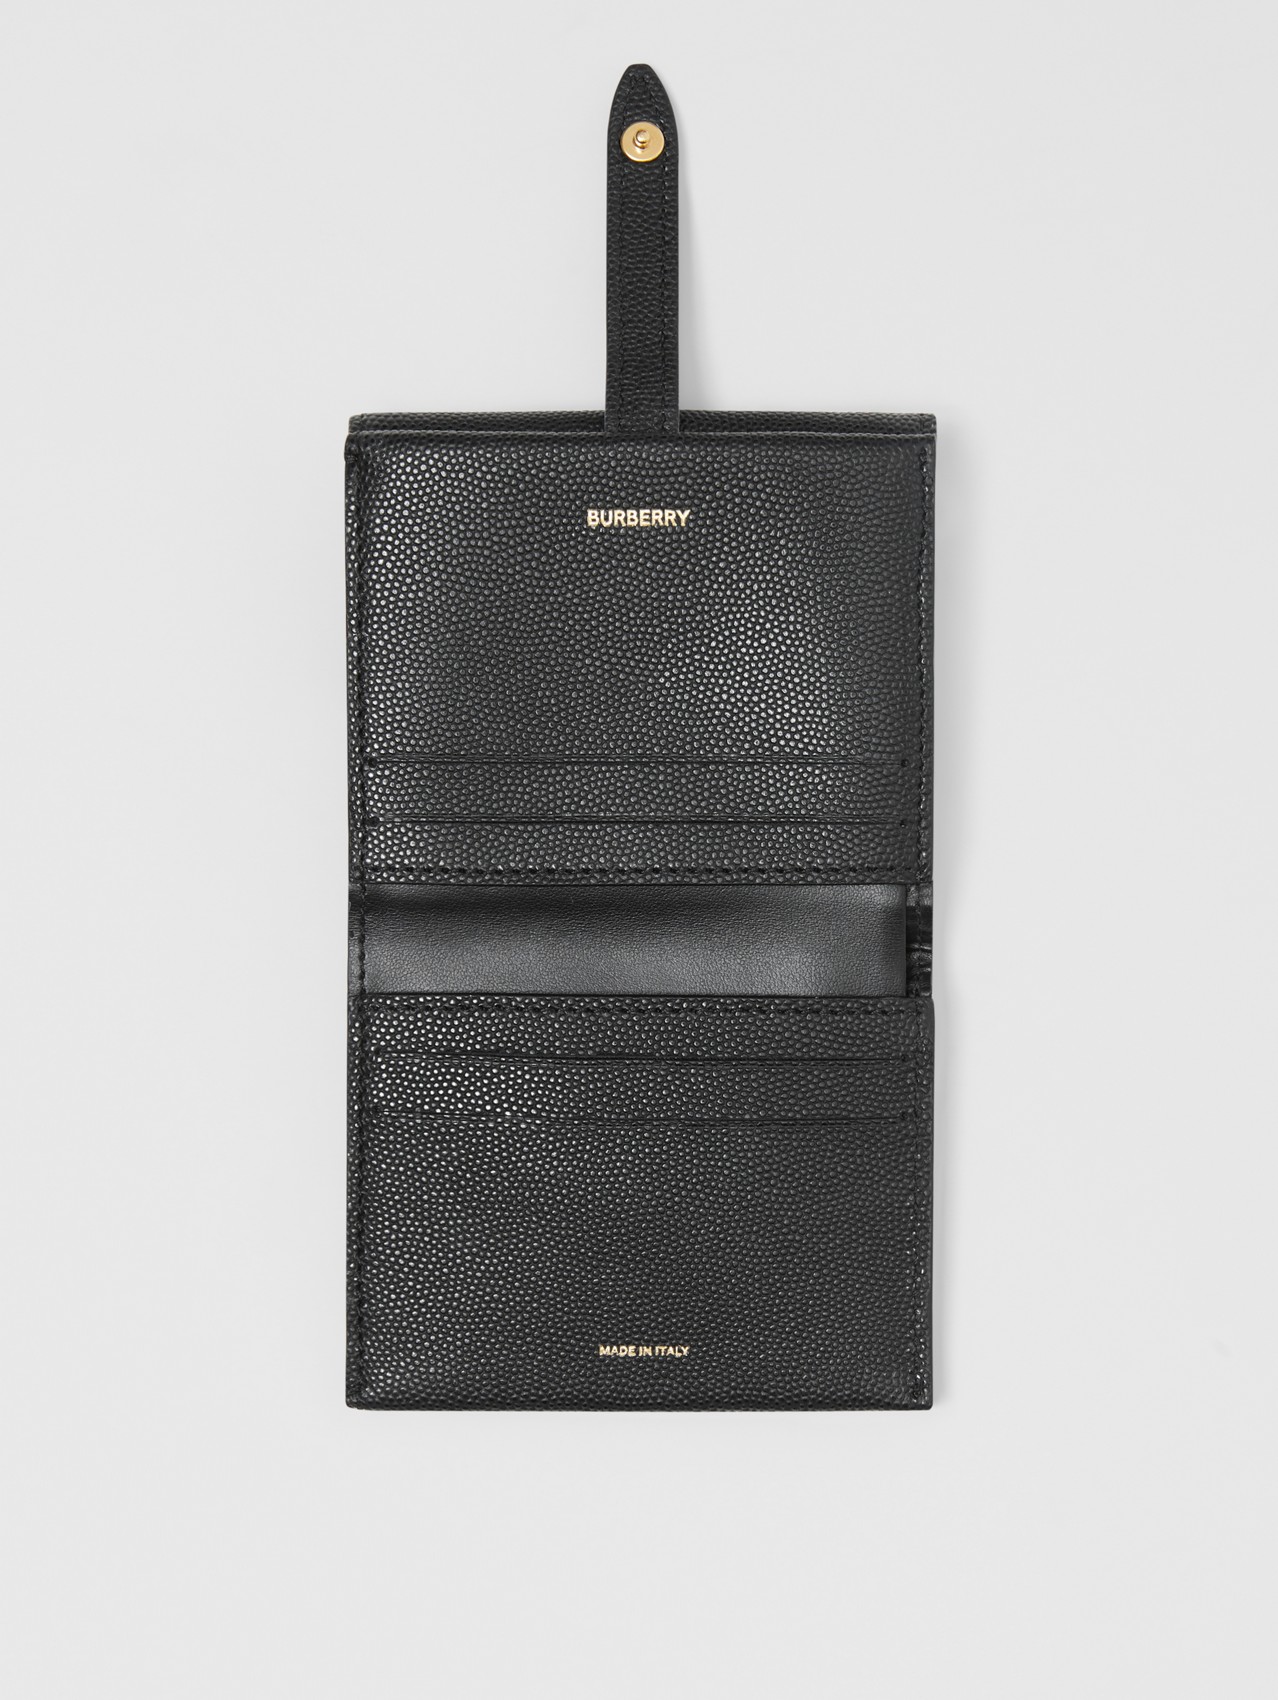 Monogram Motif Grainy Leather Folding Wallet in Black